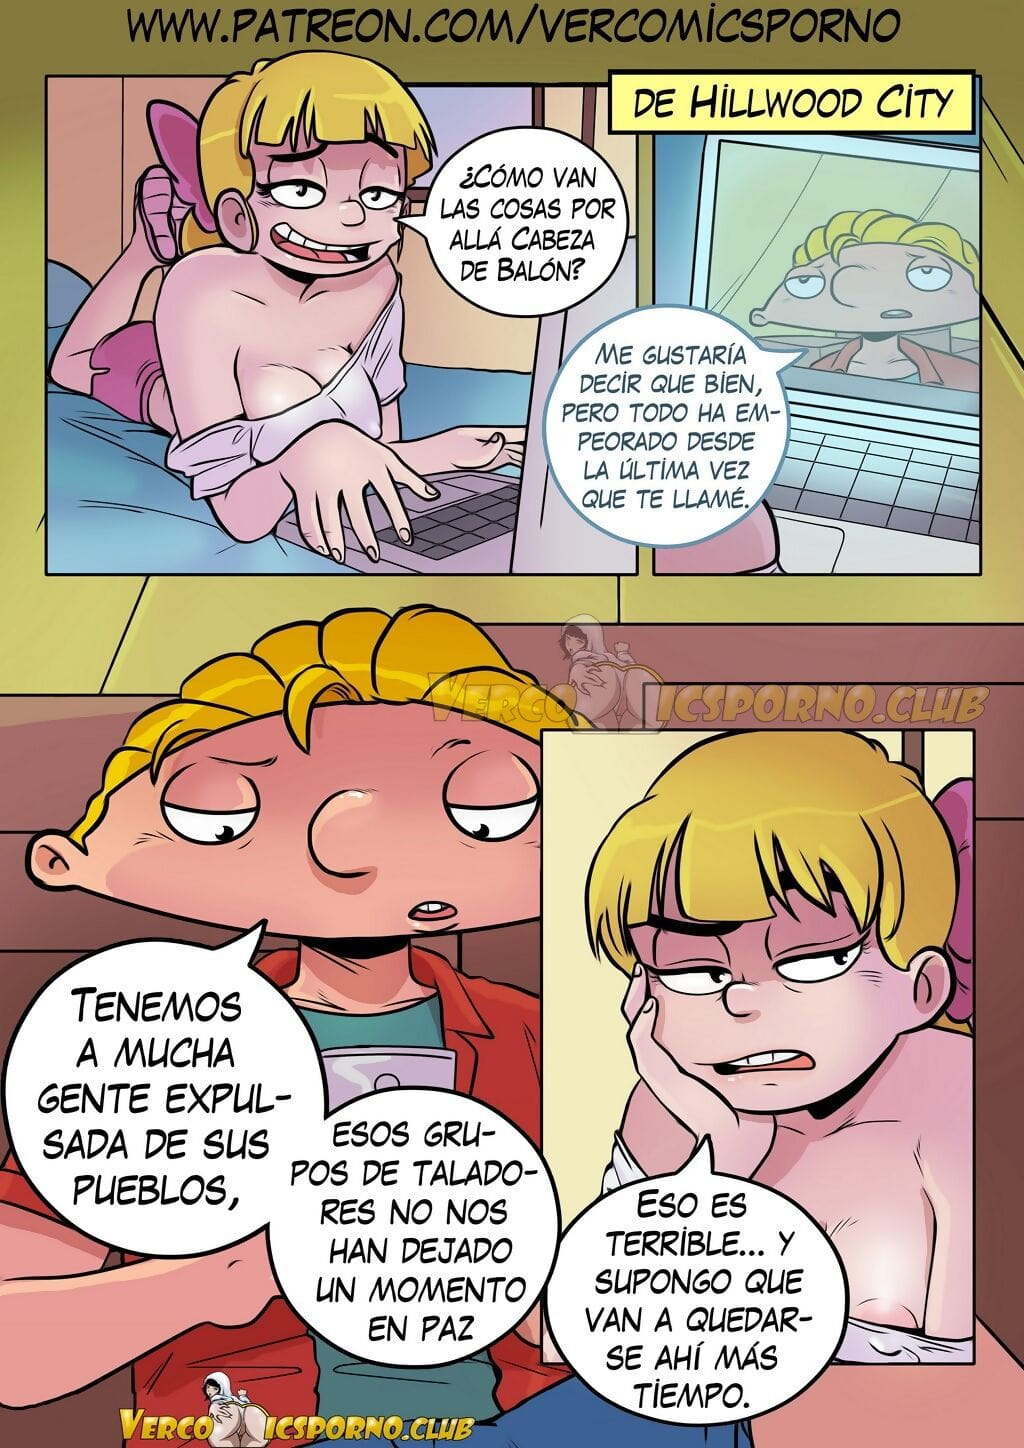 Hey Helga tình yêu giữa gay de - - - page 1